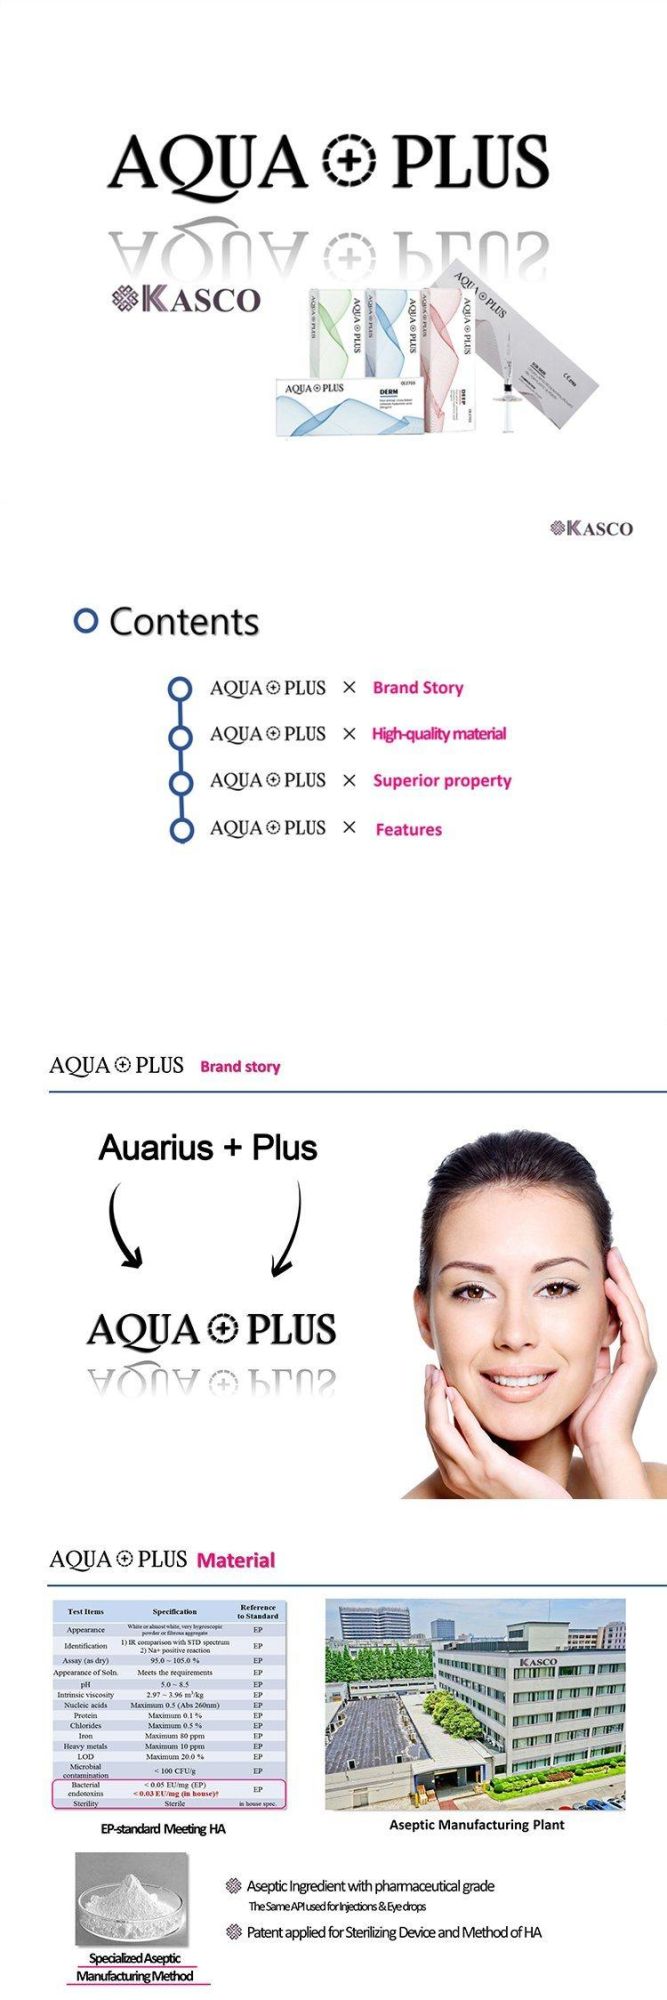 Aqua Plus 2ml Injectable Hyaluronic Acid Dermal Fillers for Lip